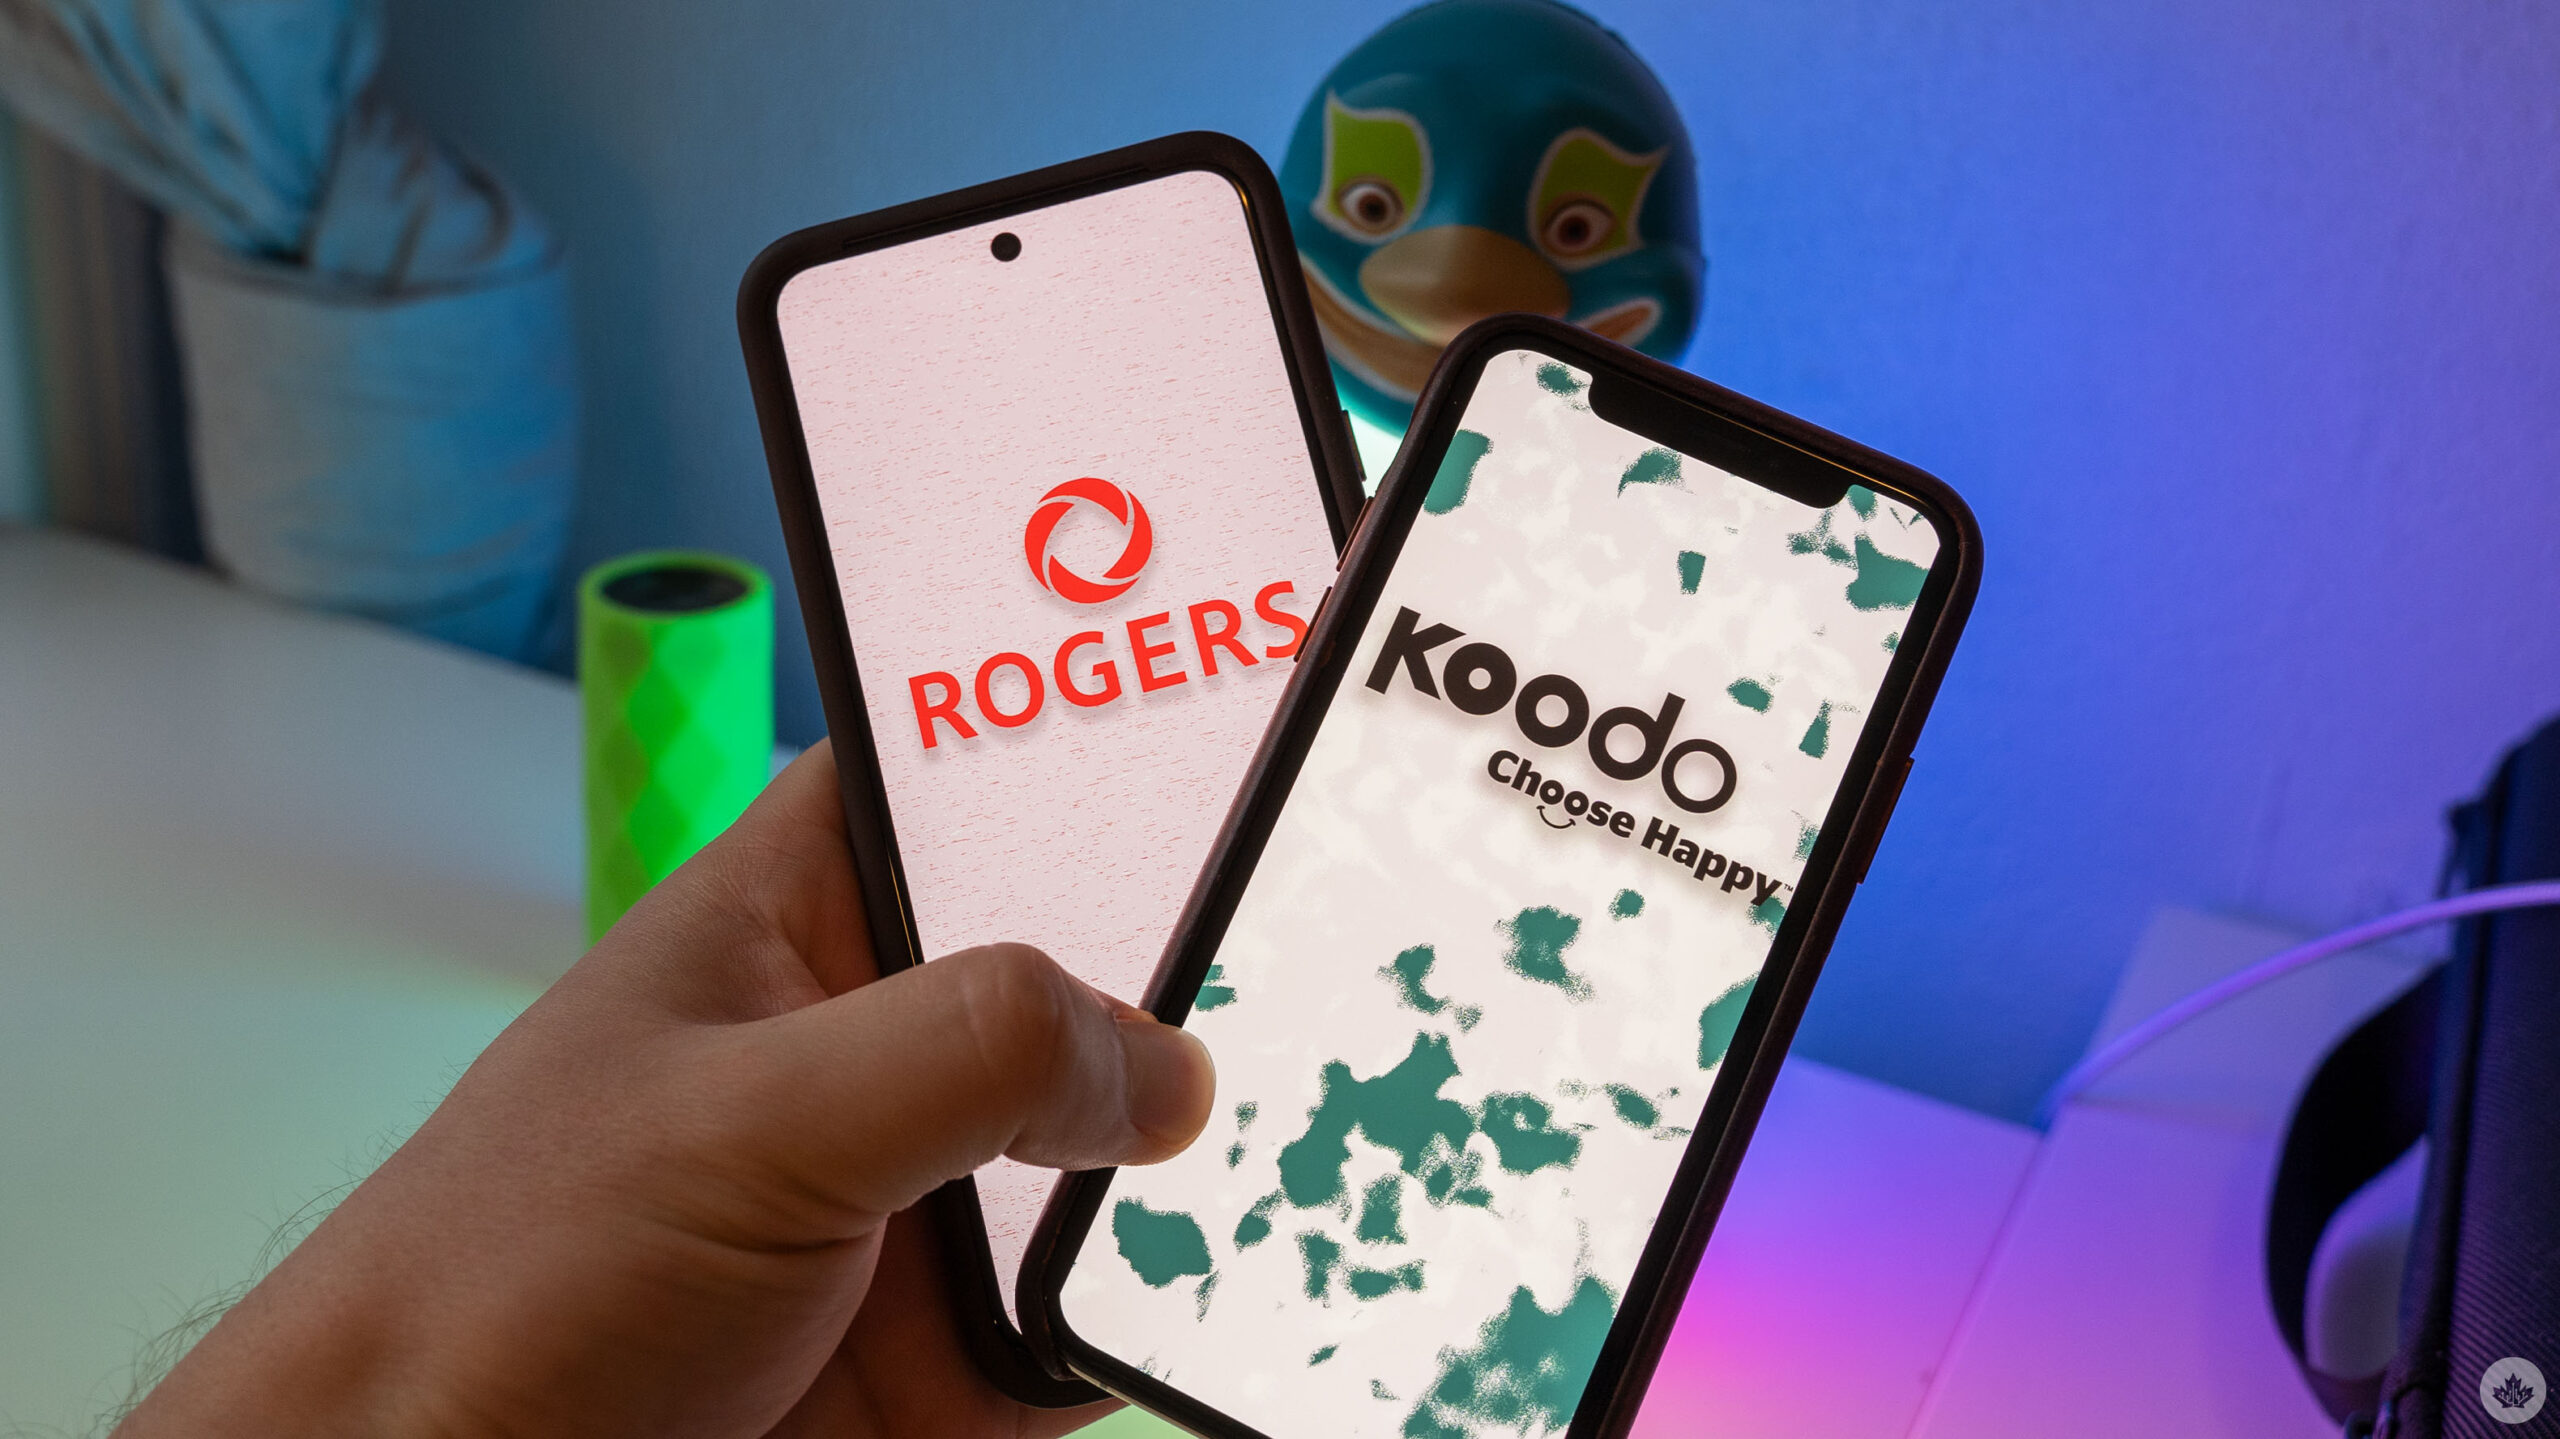 Rogers and Koodo logos on smartphones.